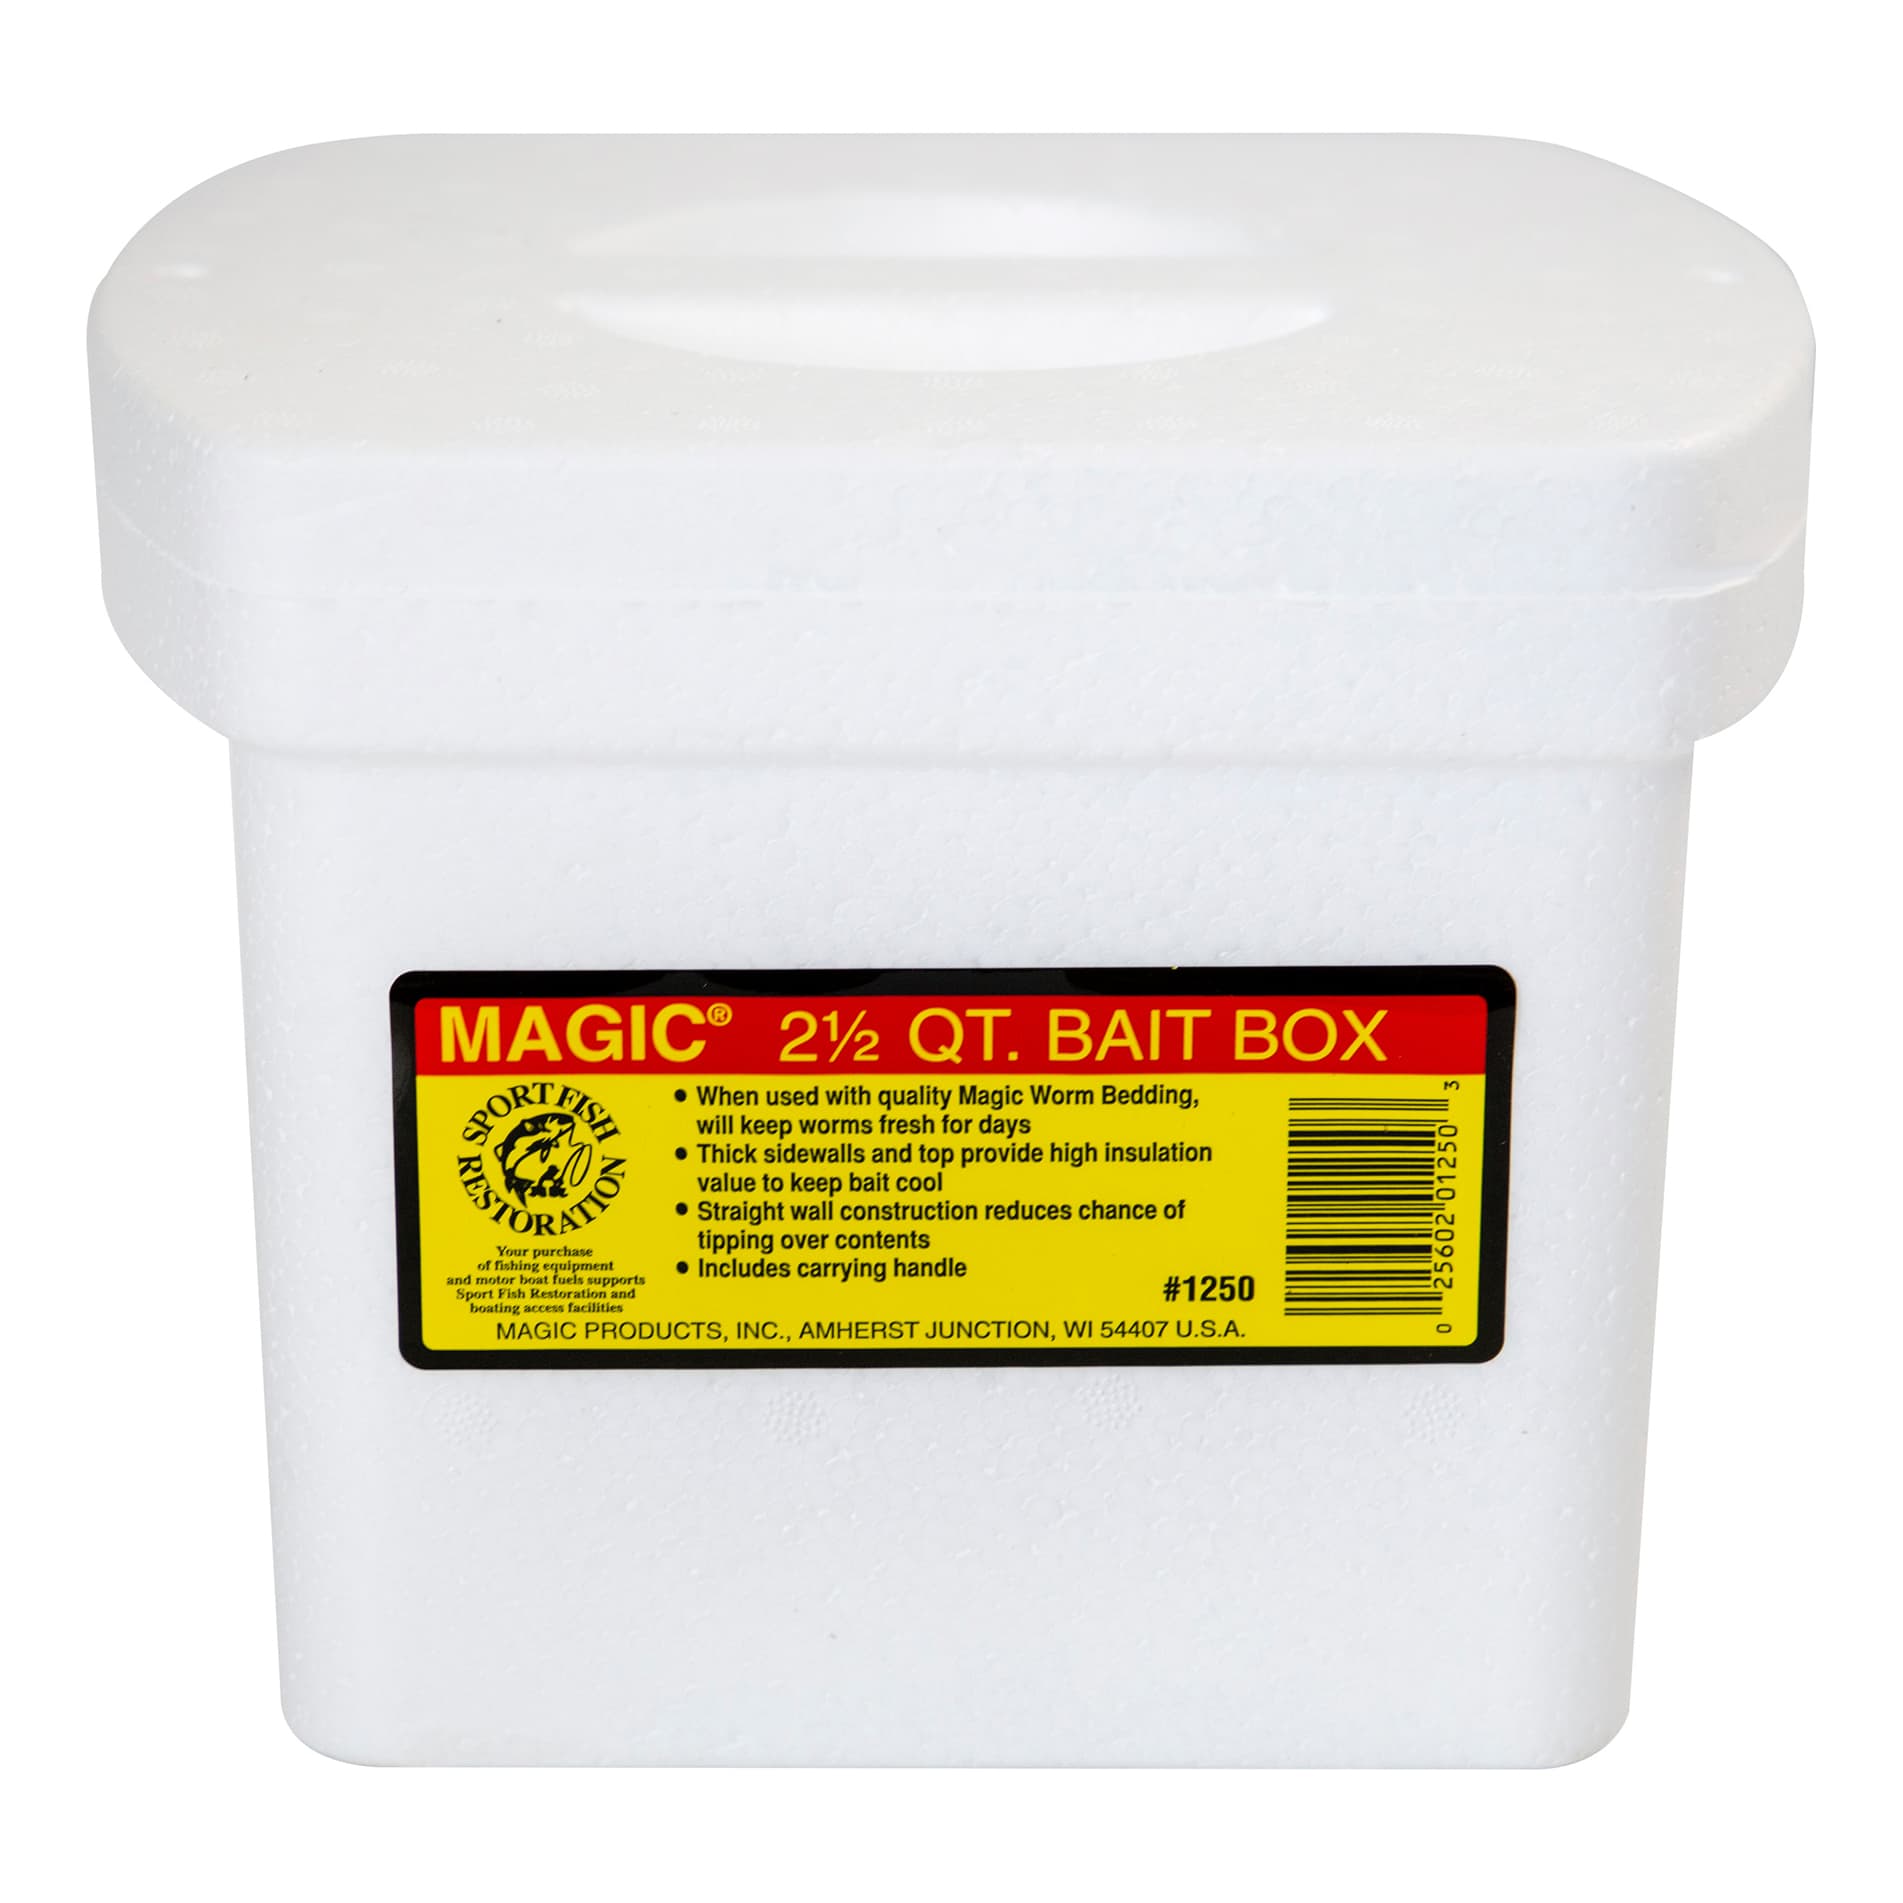 Magic® 2 1/2 Quart Bait Box